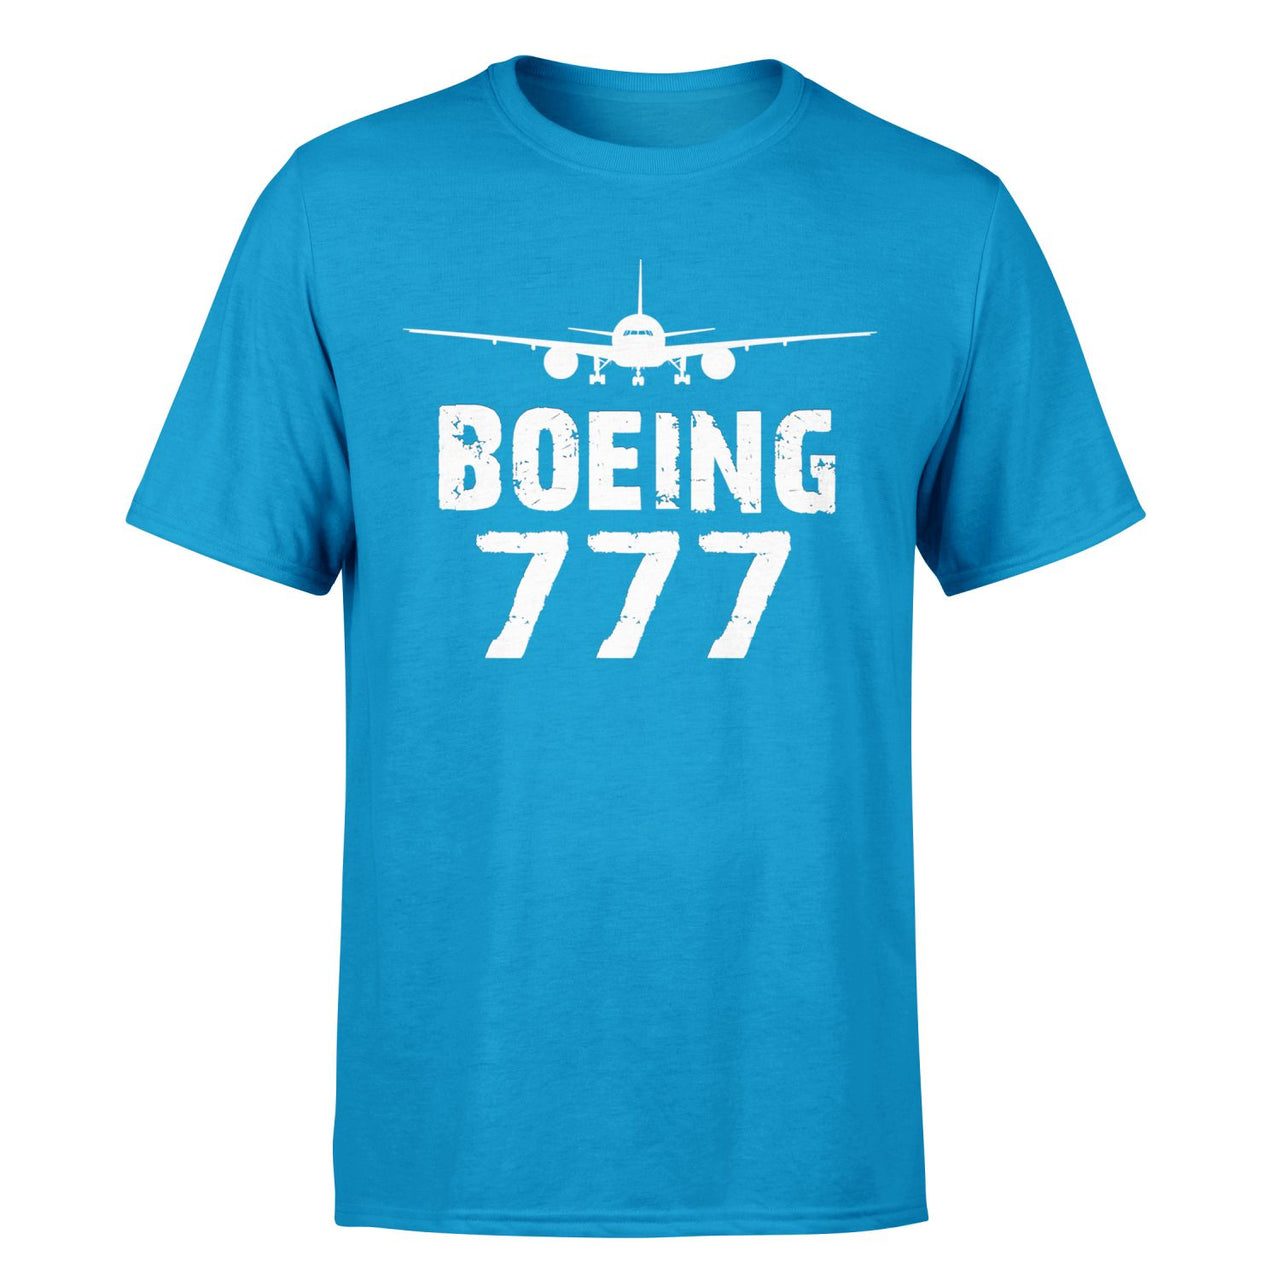 Boeing 777 & Plane Designed T-Shirts